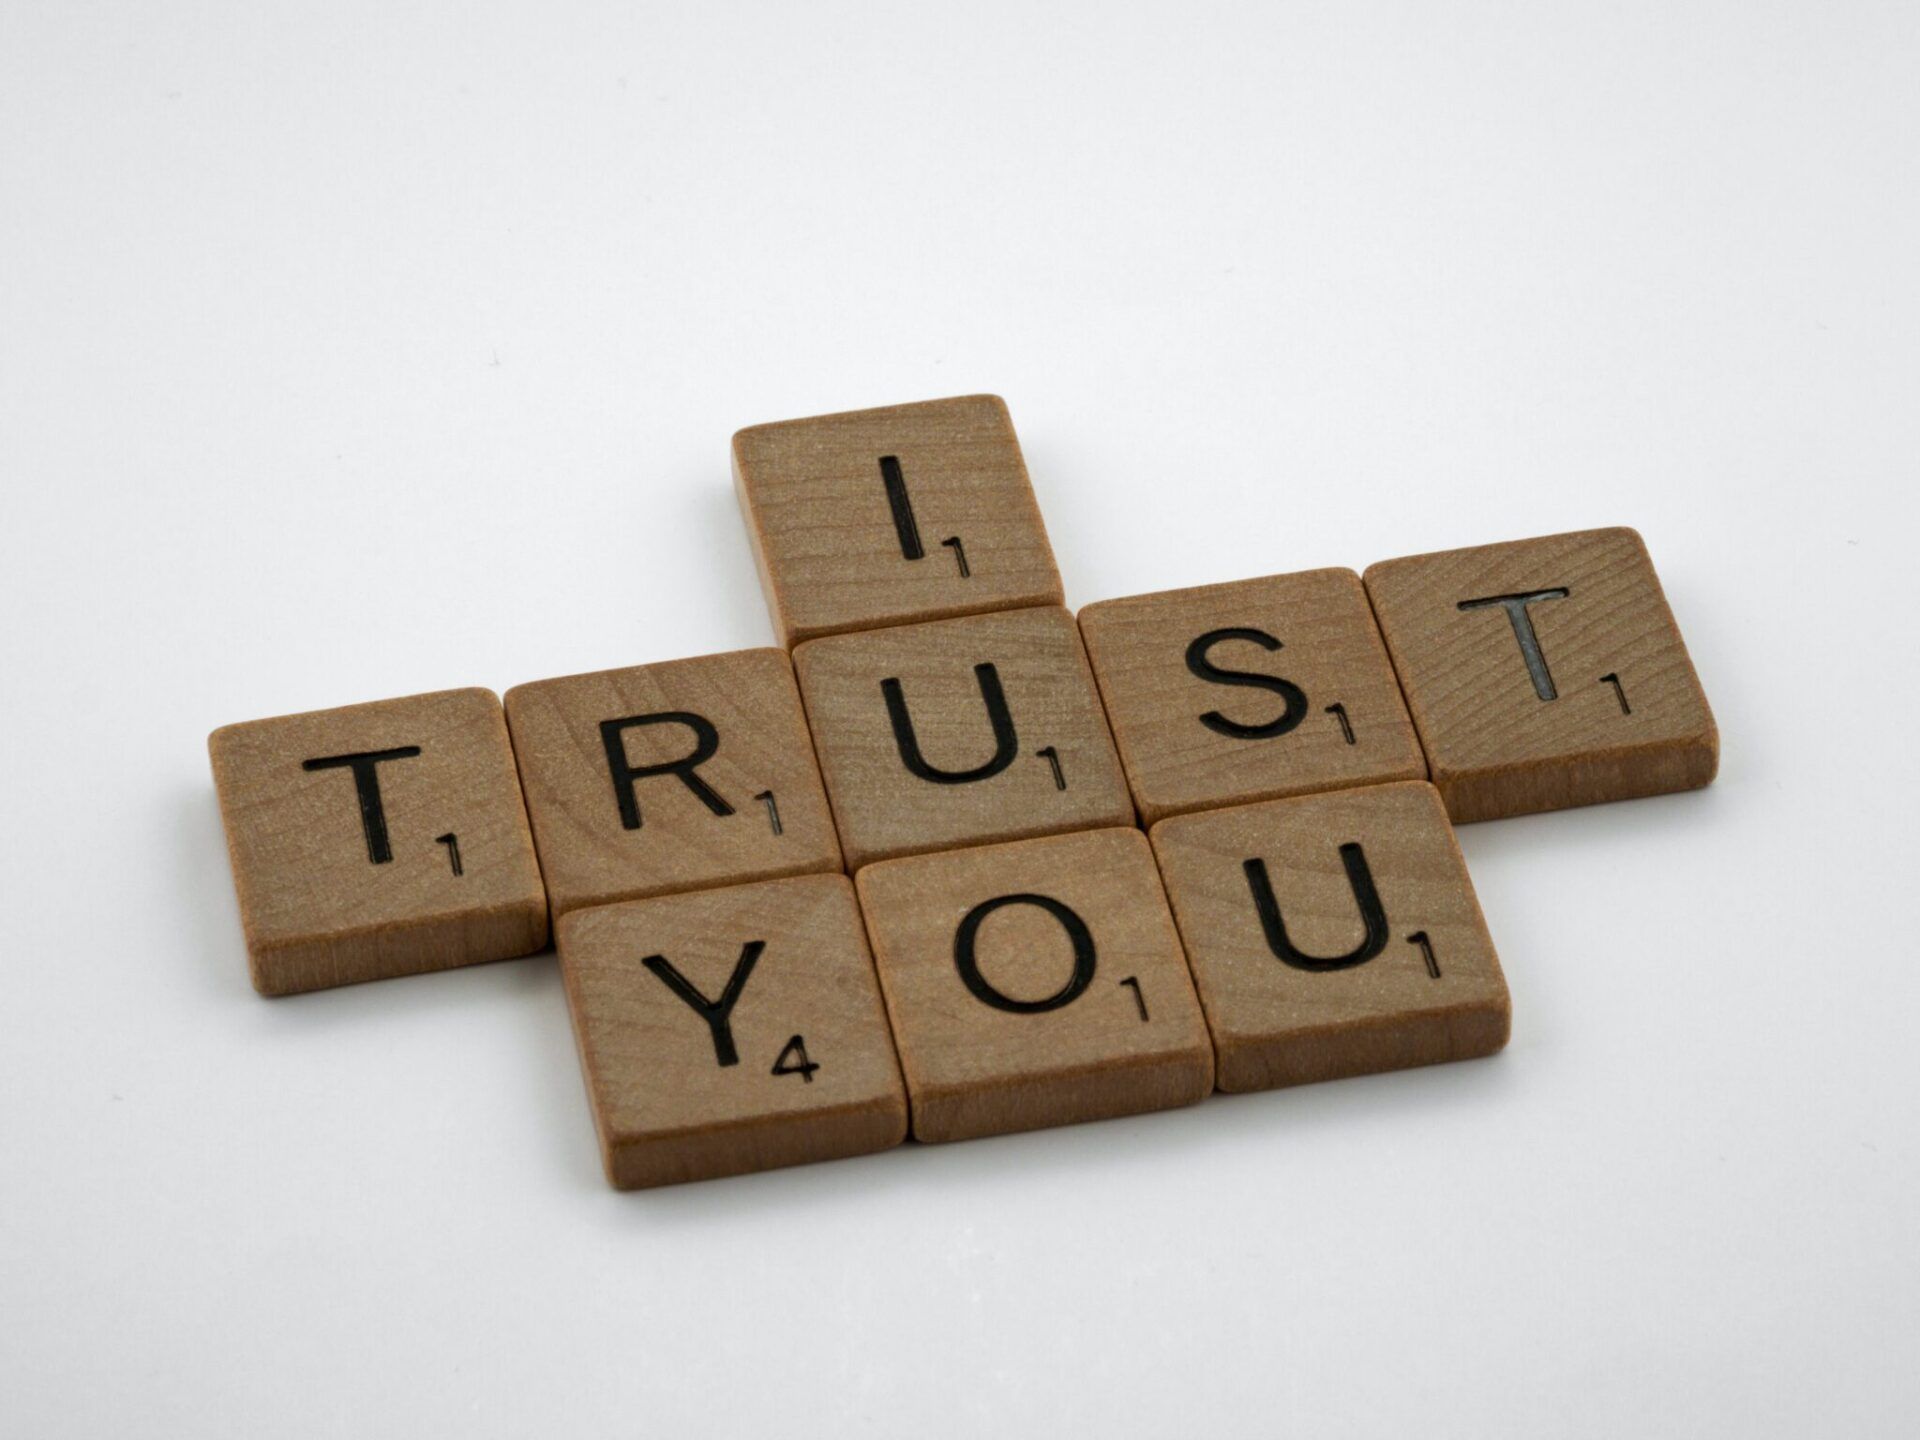 I trust you photo